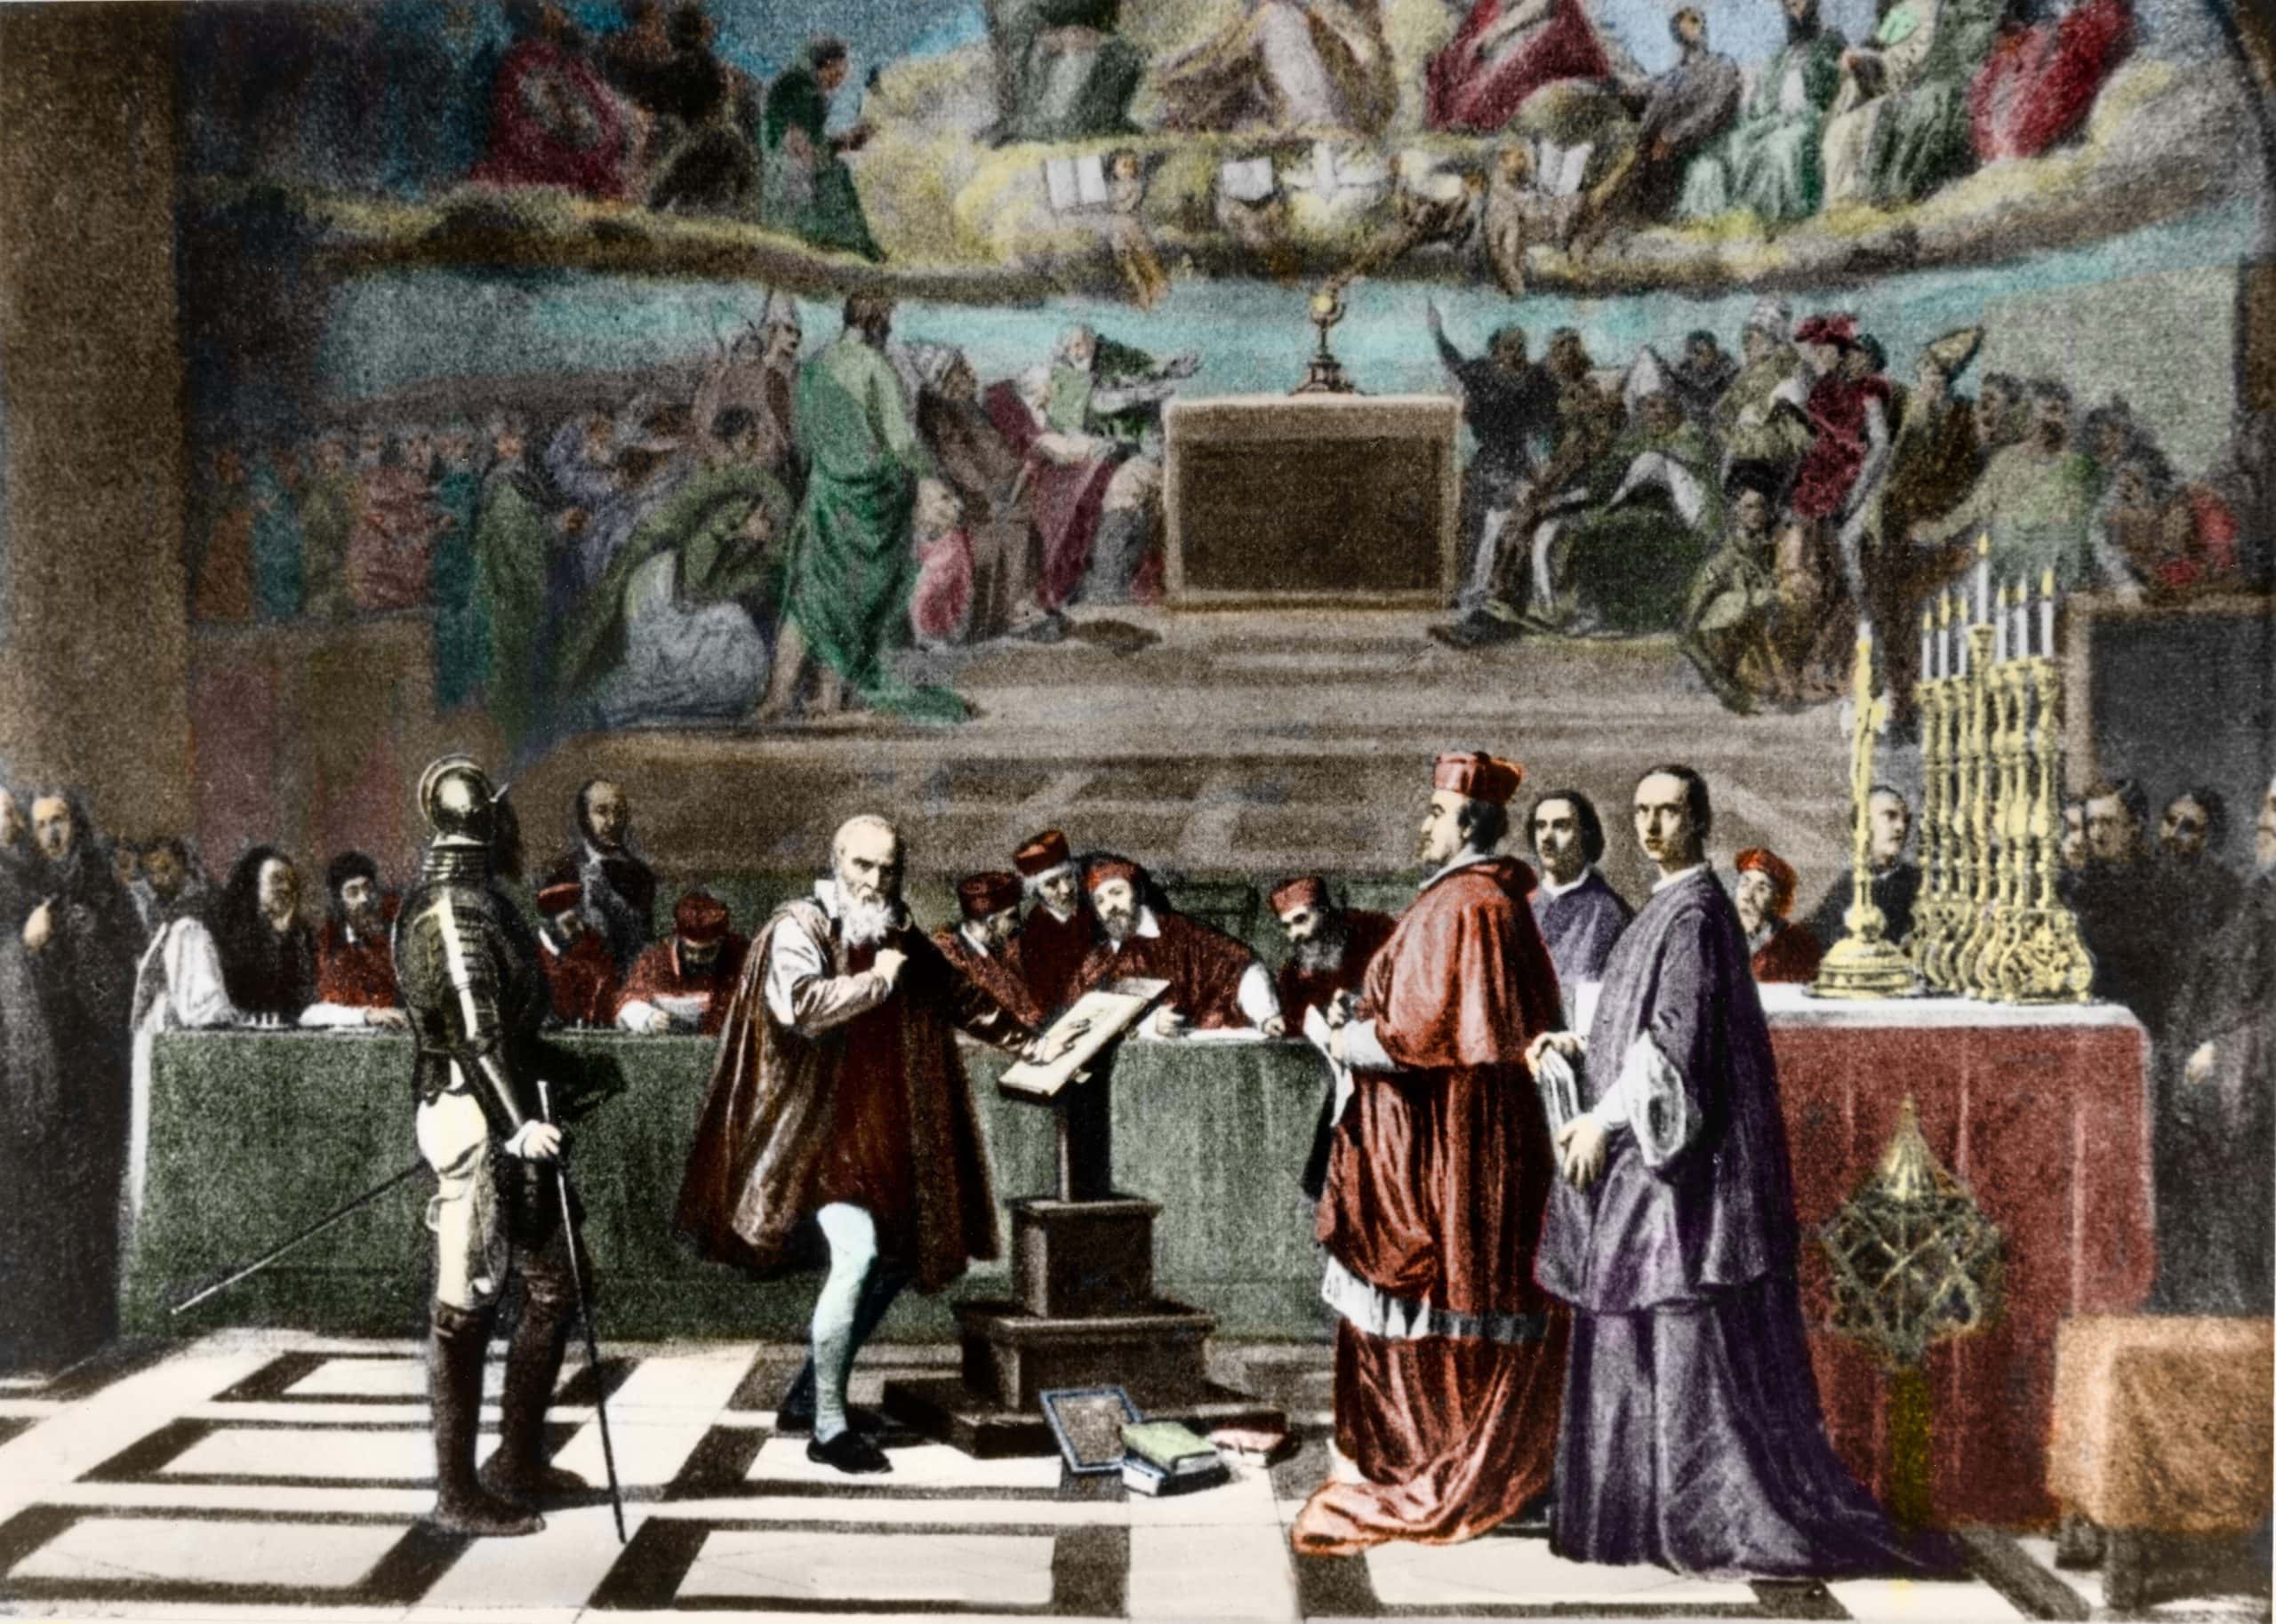 Galileo Galilei facts